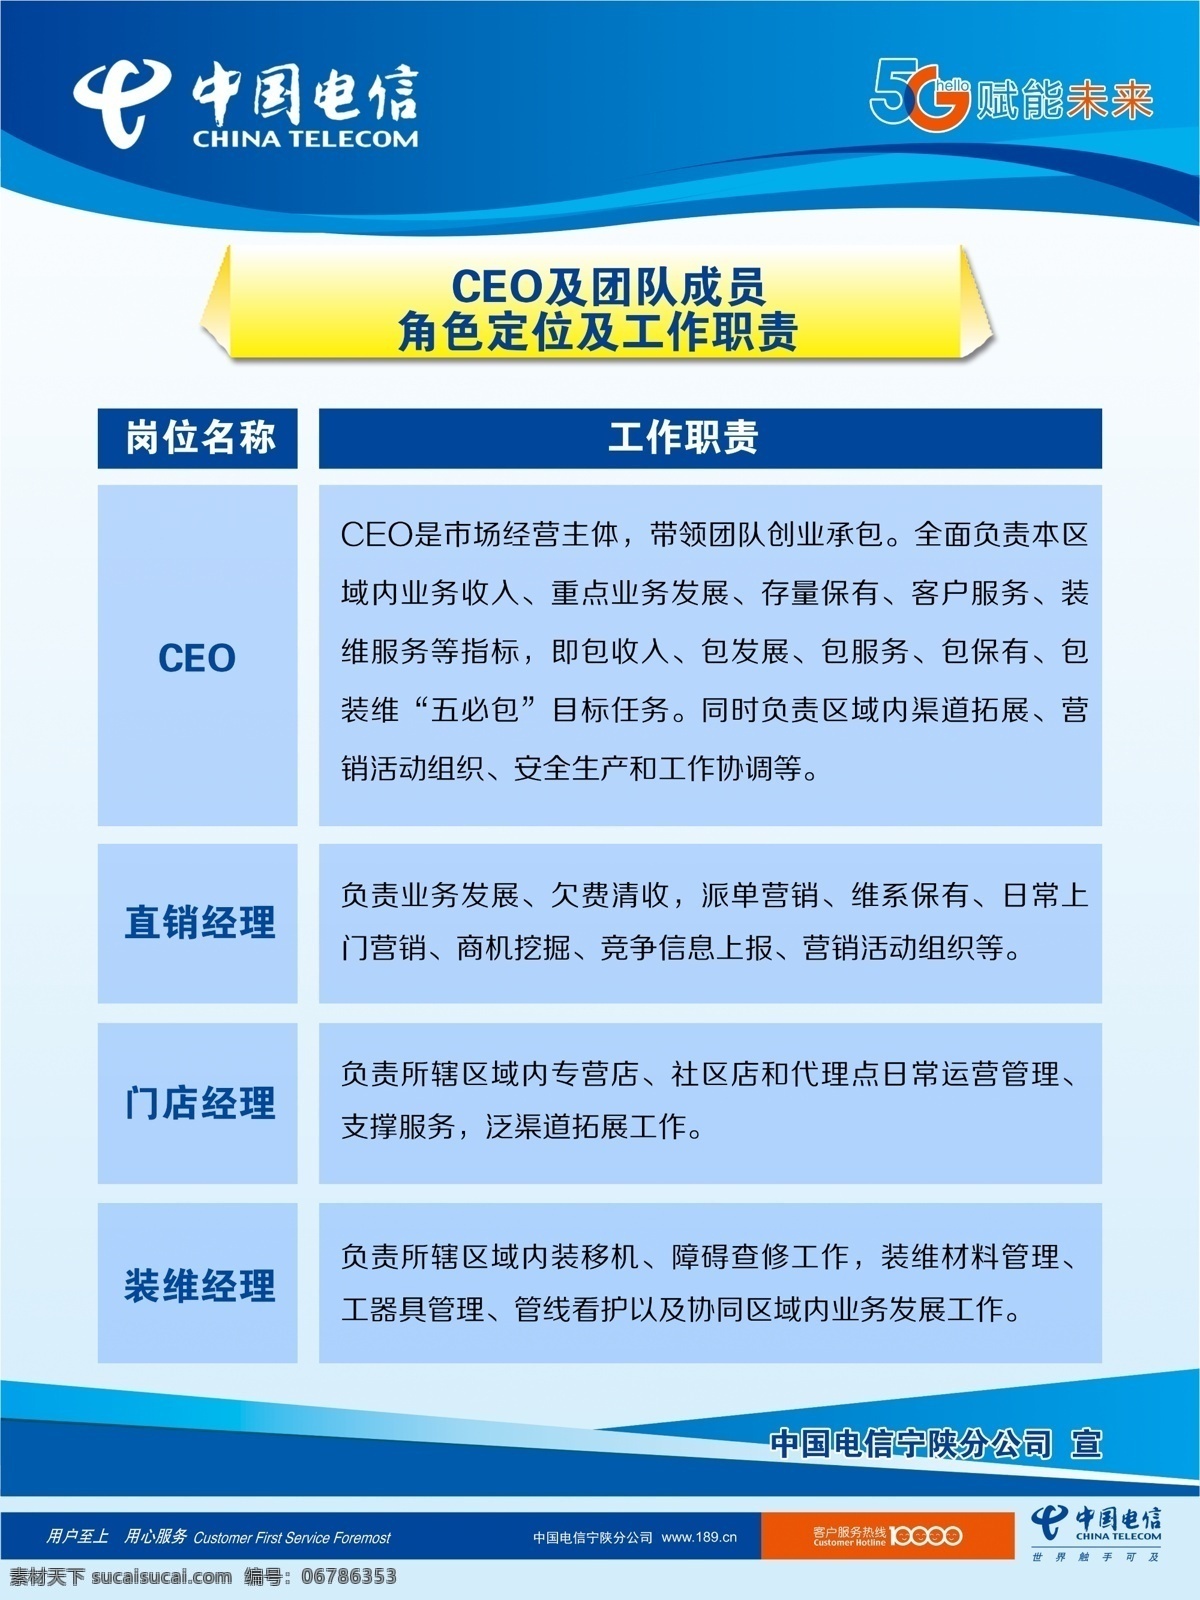 ceo 团队 成员 角色 定位 工作 电信 中国电信 5g 电信标志 电信ceo ceo及团队 角色定位 工作职责 展板 制度 展板模板